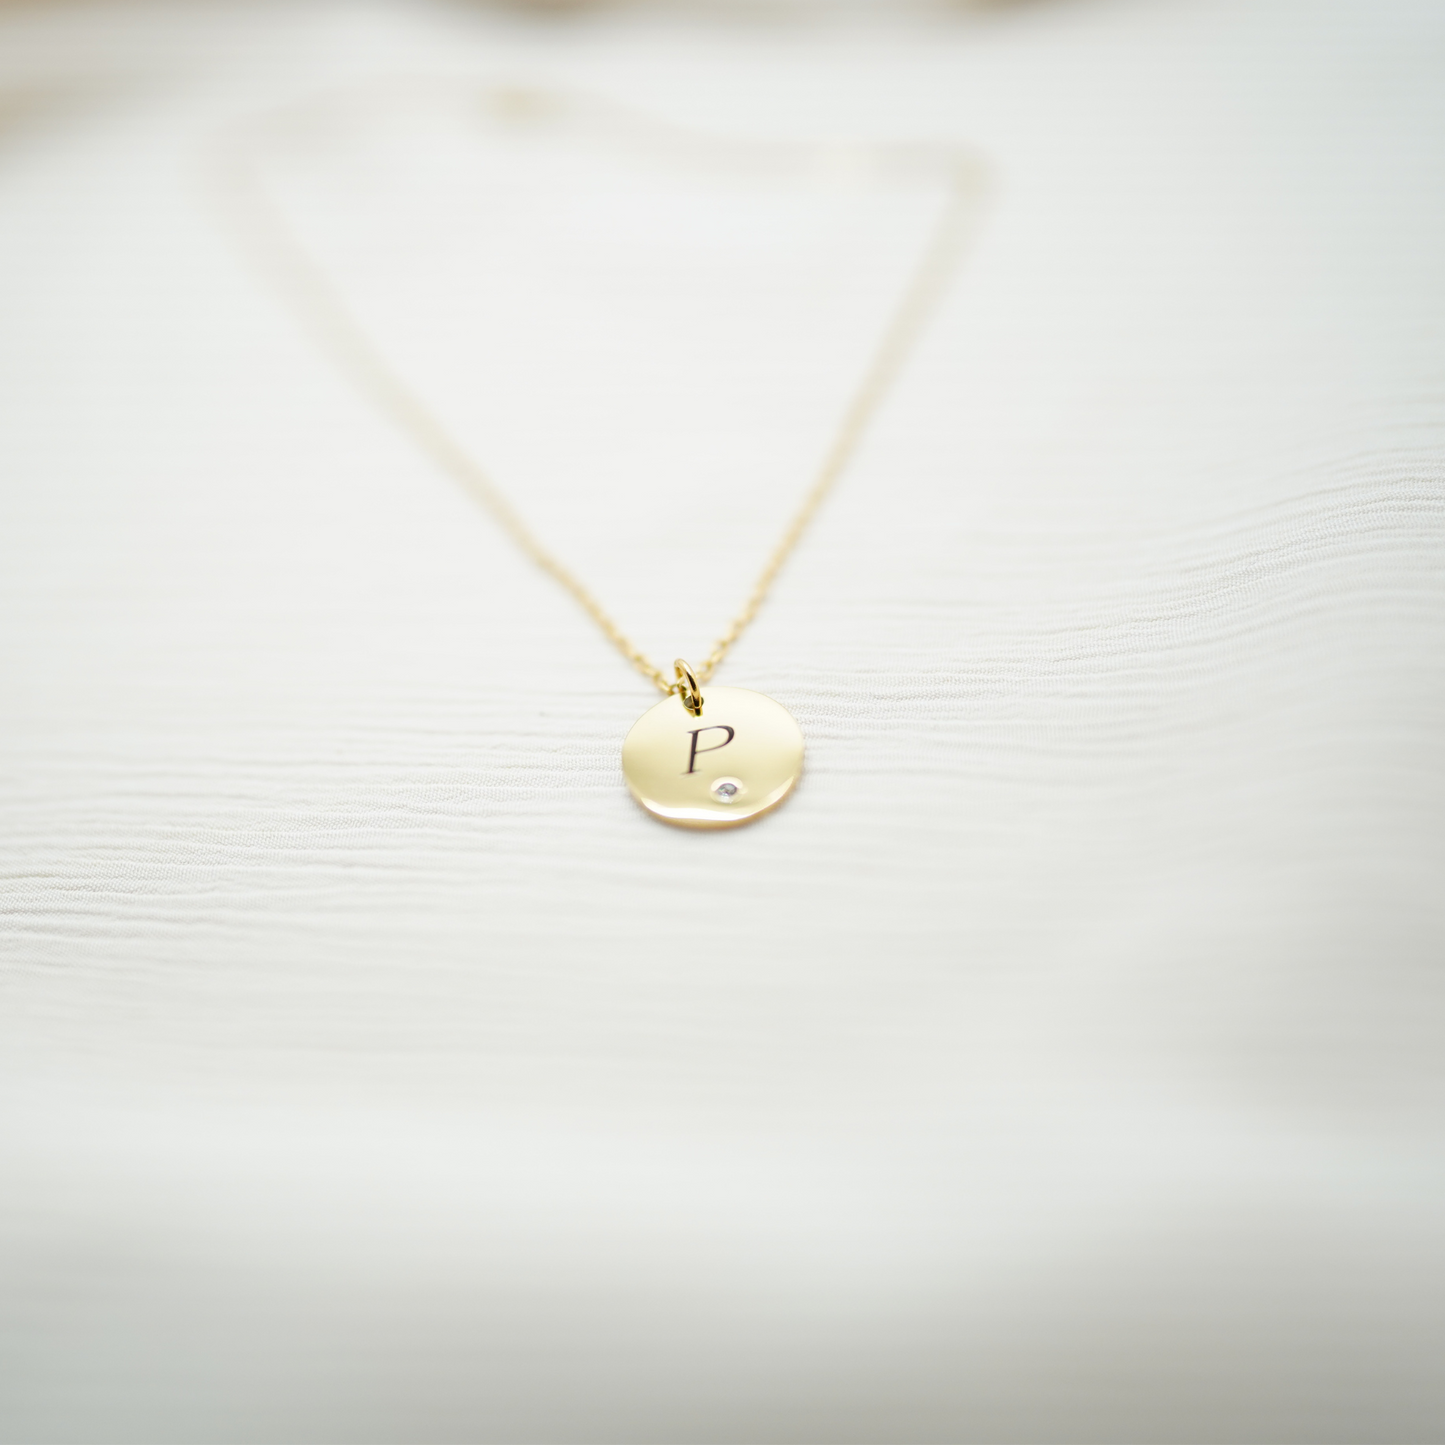 Personalized (15mm Pendant w/crystal charm) 18K Gold Vermeil Pendant Necklace